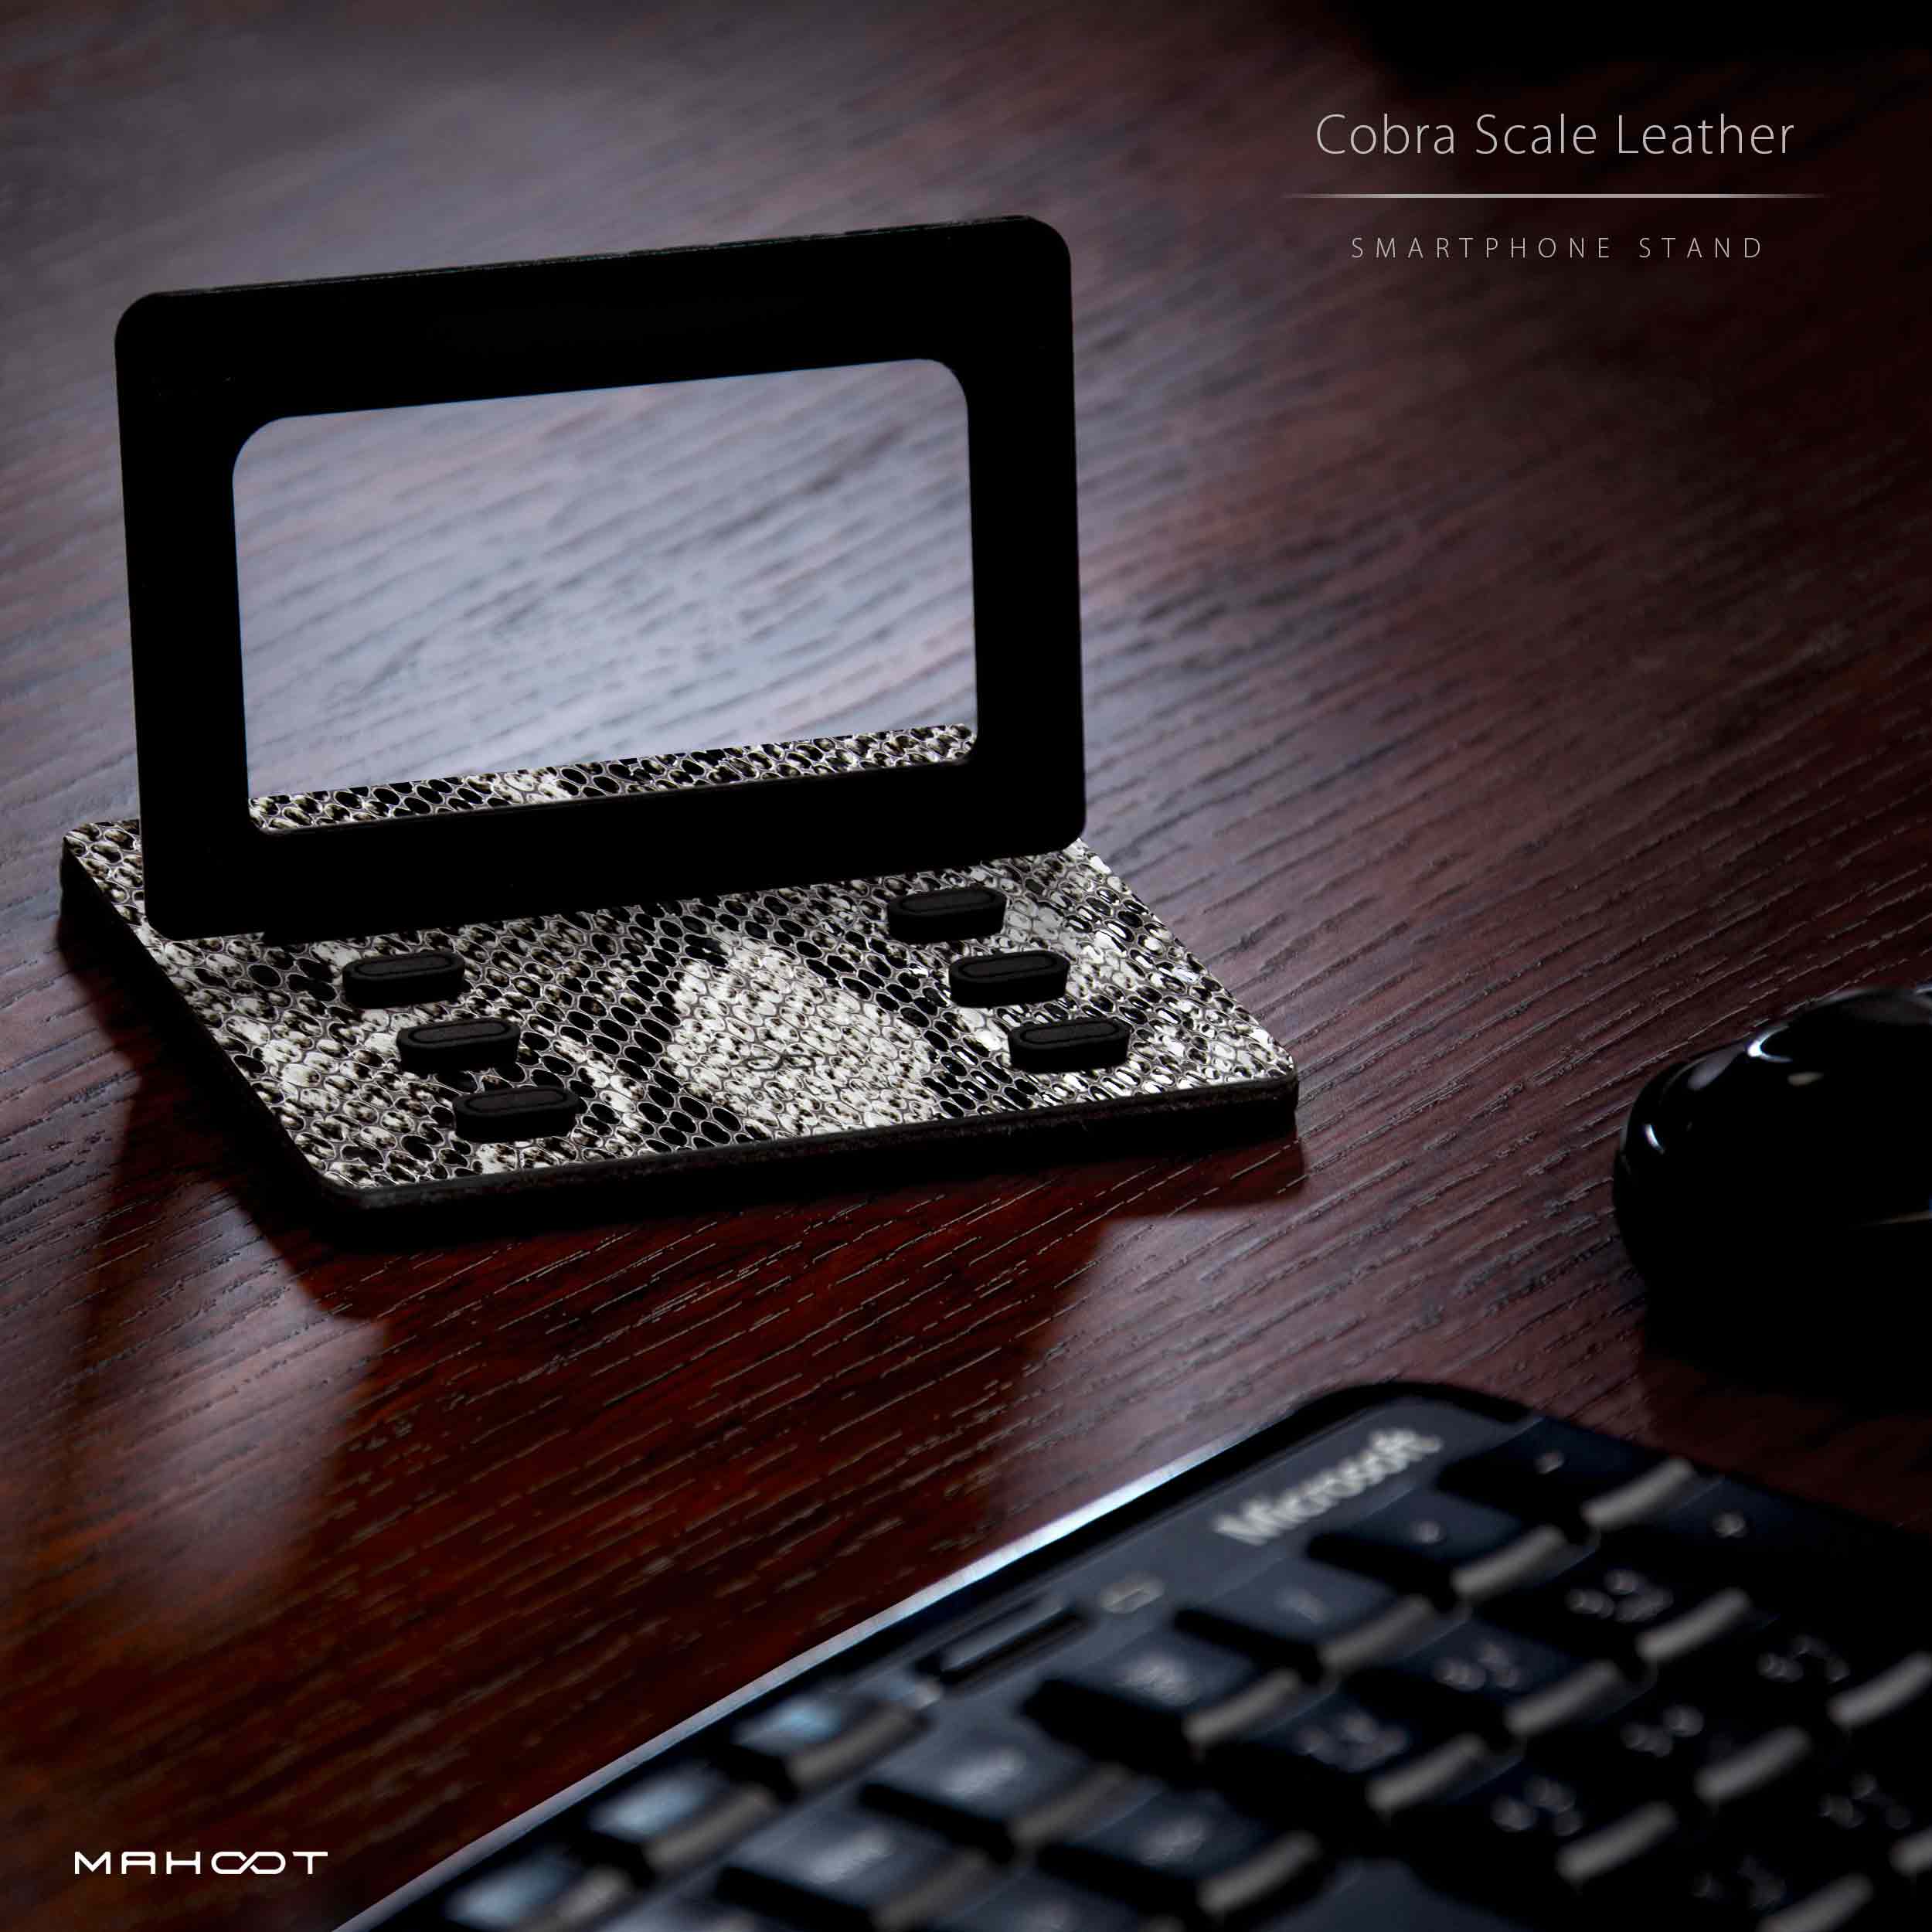 smartphone_stand_cobra_scale_leather_5